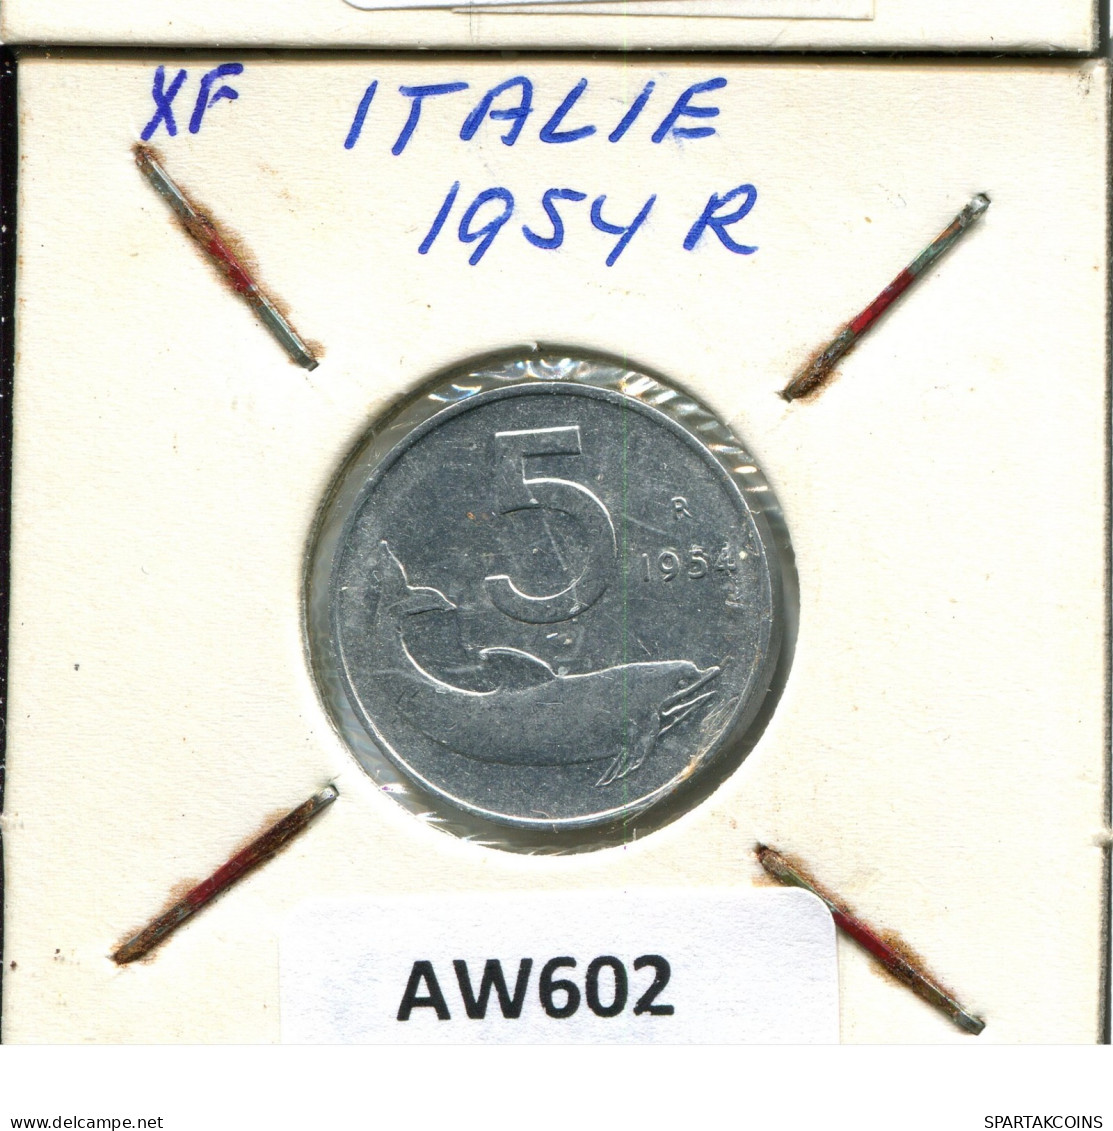 5 LIRE 1954 R ITALY Coin #AW602.U.A - 5 Liras